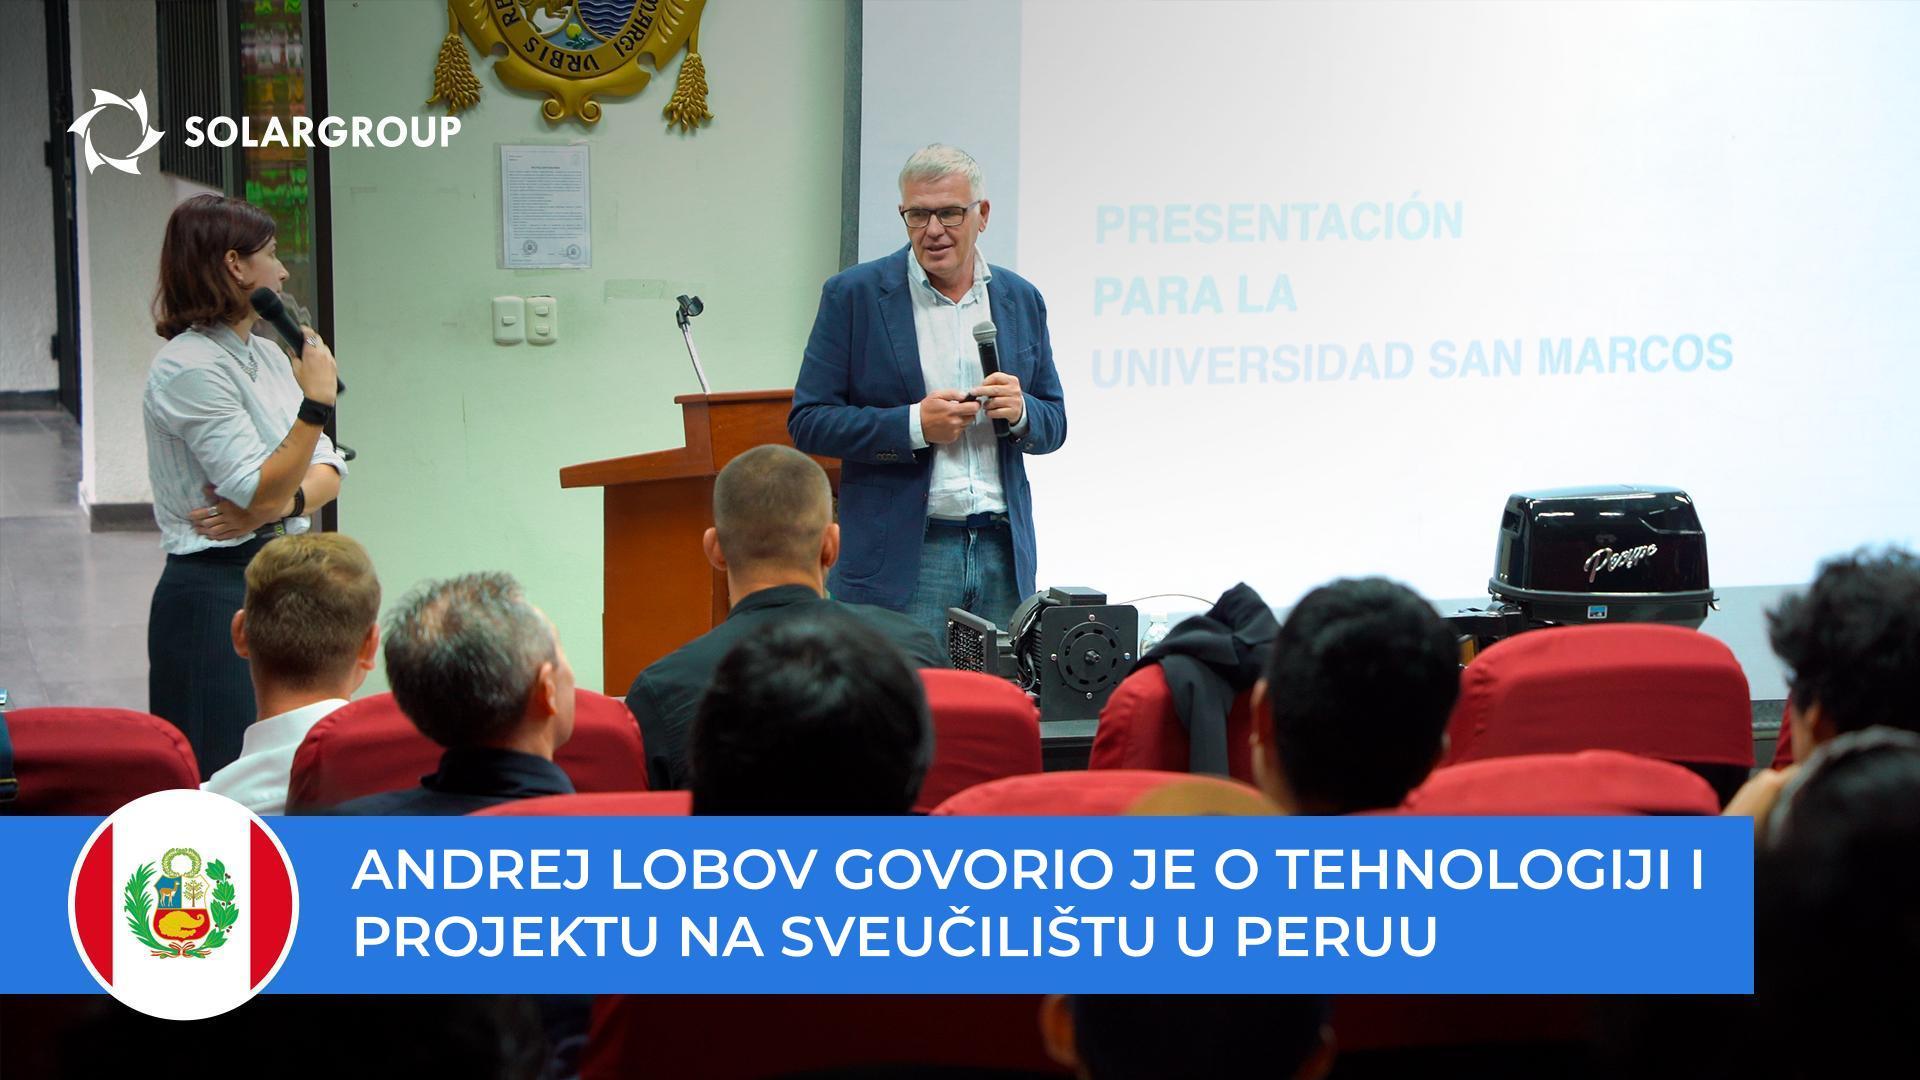 Andrej Lobov govorio je o tehnologiji i projektu studentima i profesorima sveučilišta San Marcos